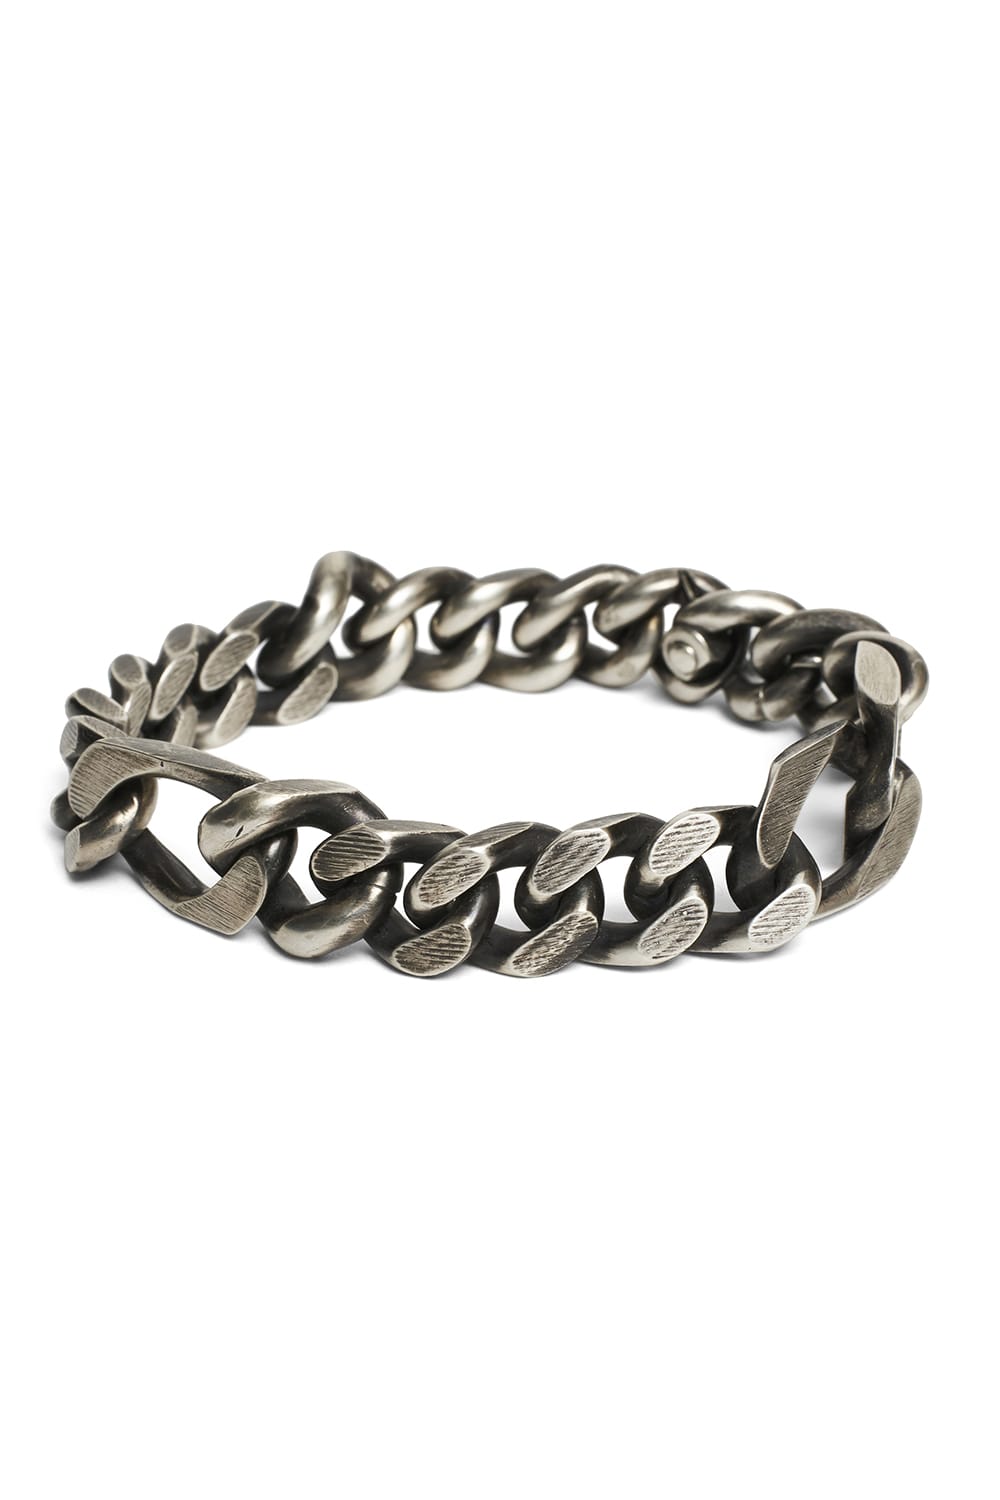 925 silver snake chain bracelet 16-19cm | online sales on HOLYART.com